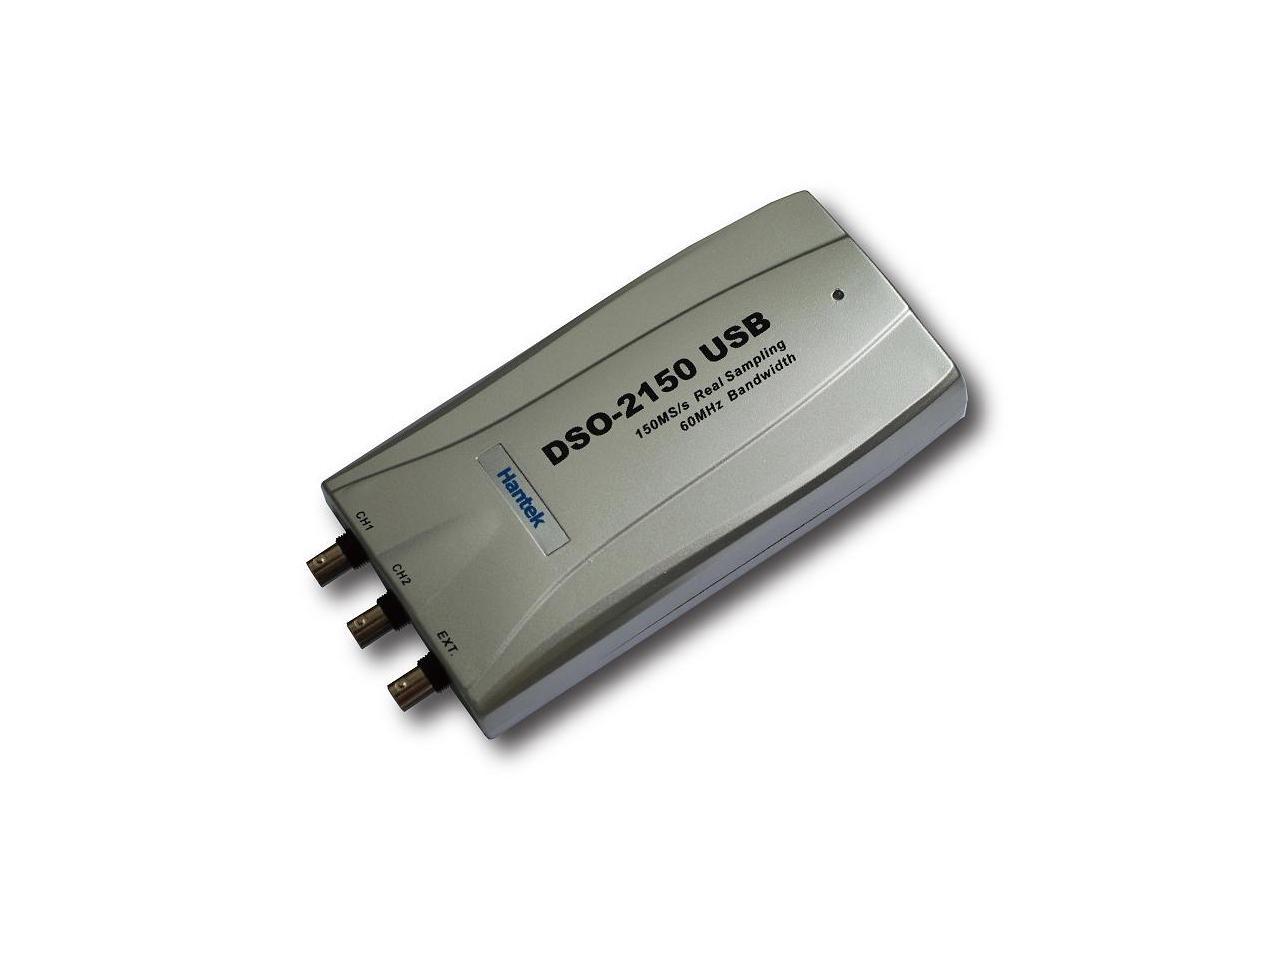 Hantek DSO-2150 PC USB Digital Oscilloscope scopemeter 60MHz 150MSa/s 64K 